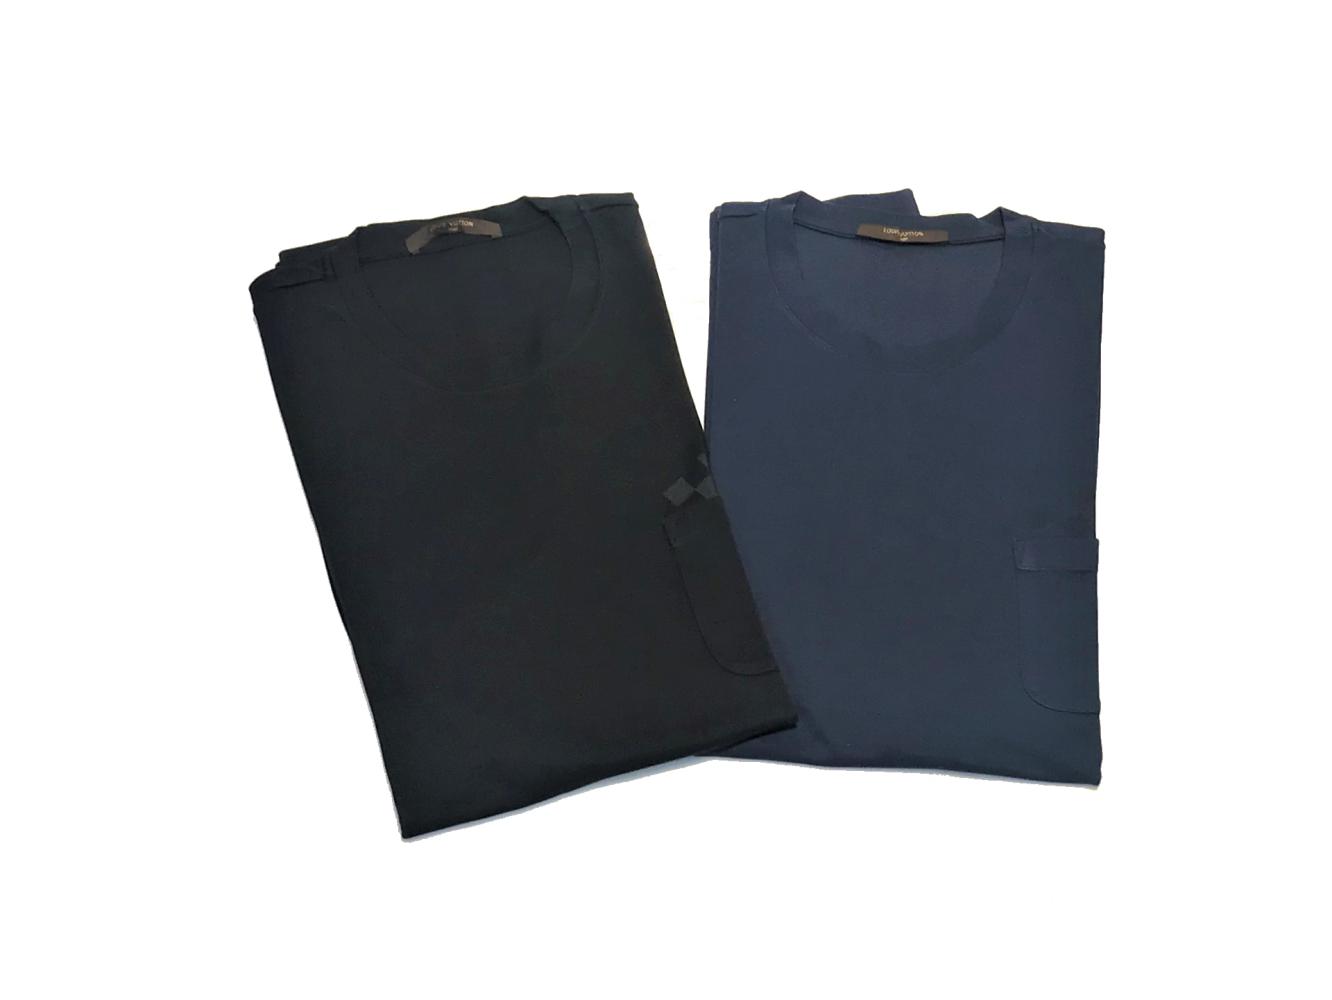 Louis Vuitton - Two Damier T-Shirts - Shapiro Auctions | Find Lots Online